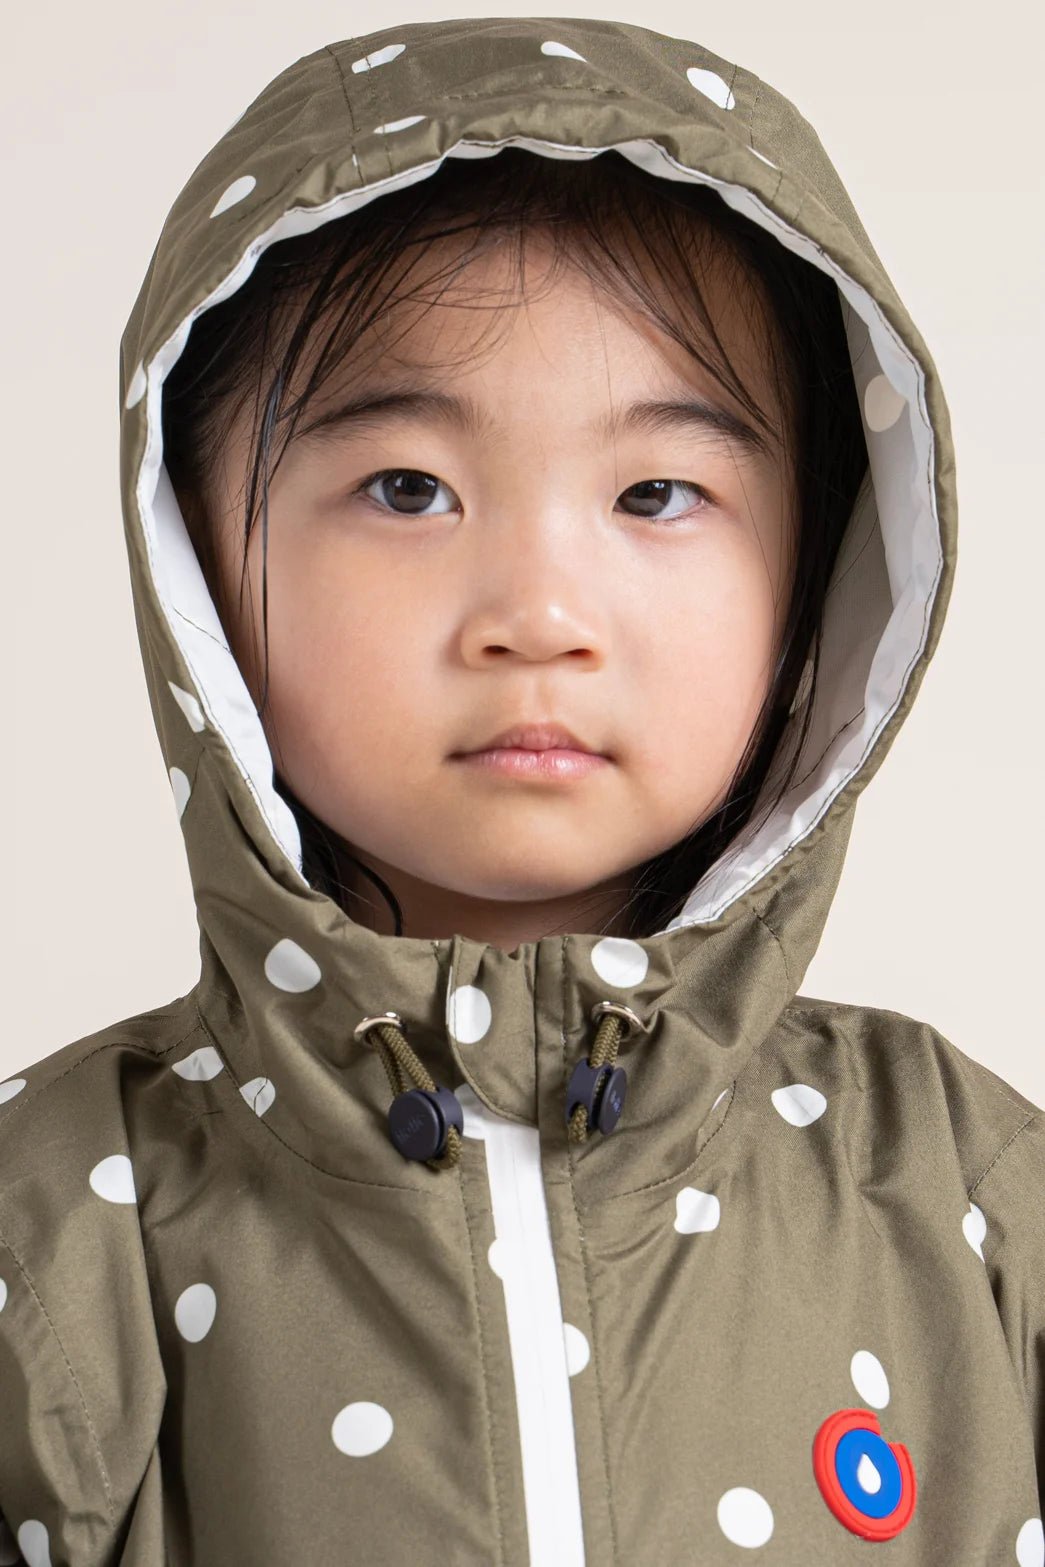 Bastille - Children's windbreaker raincoat - Flotte #couleur_pois-olive